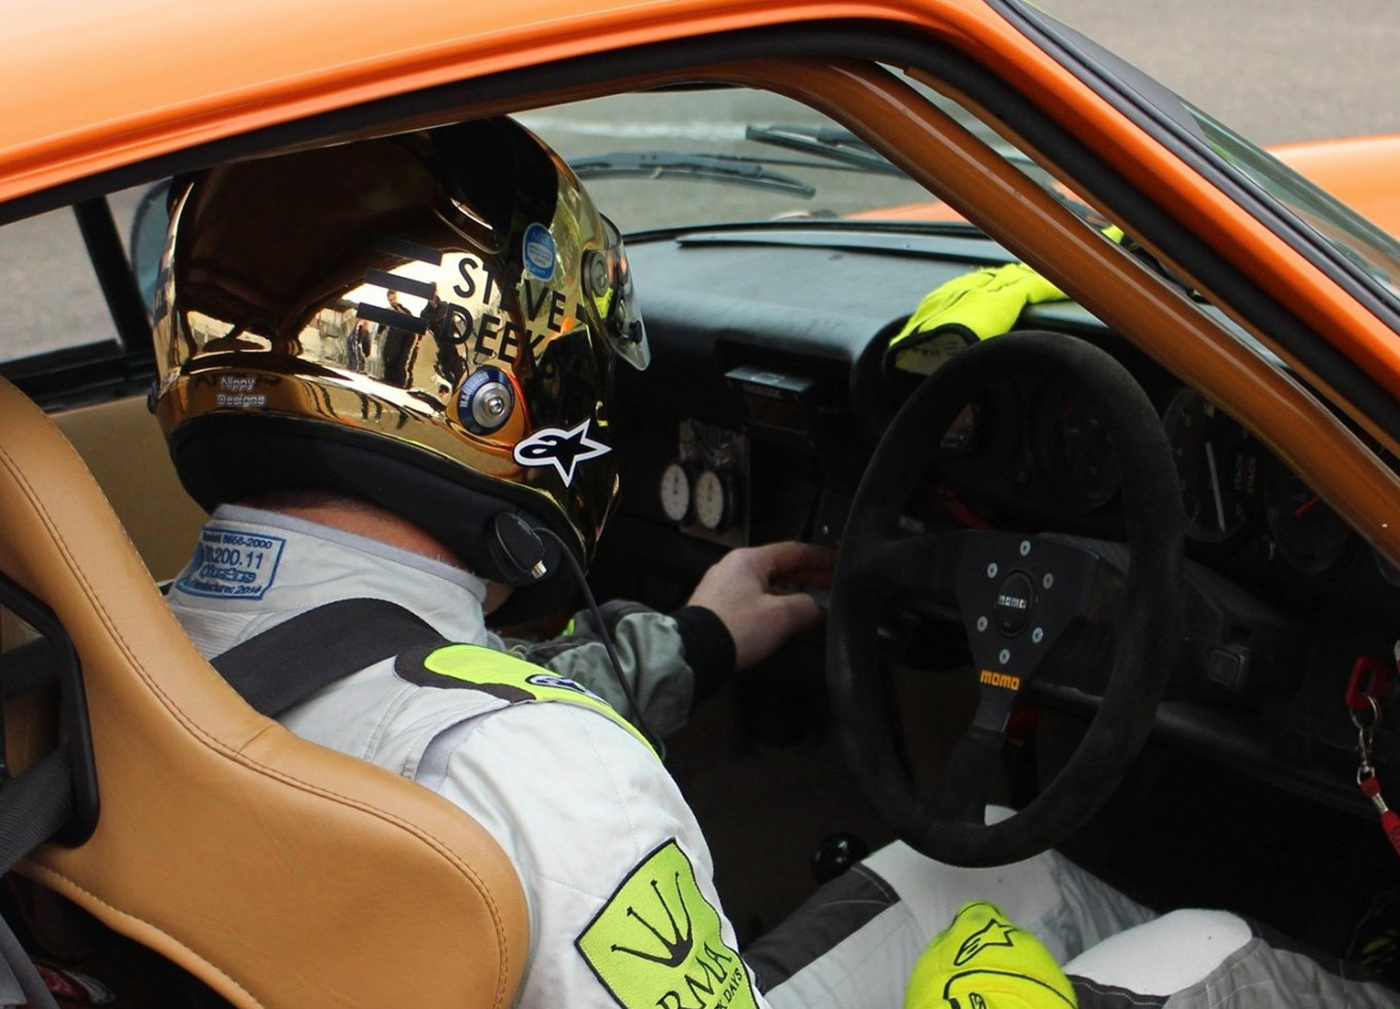 Steve Deeks Racer / Racing Driver